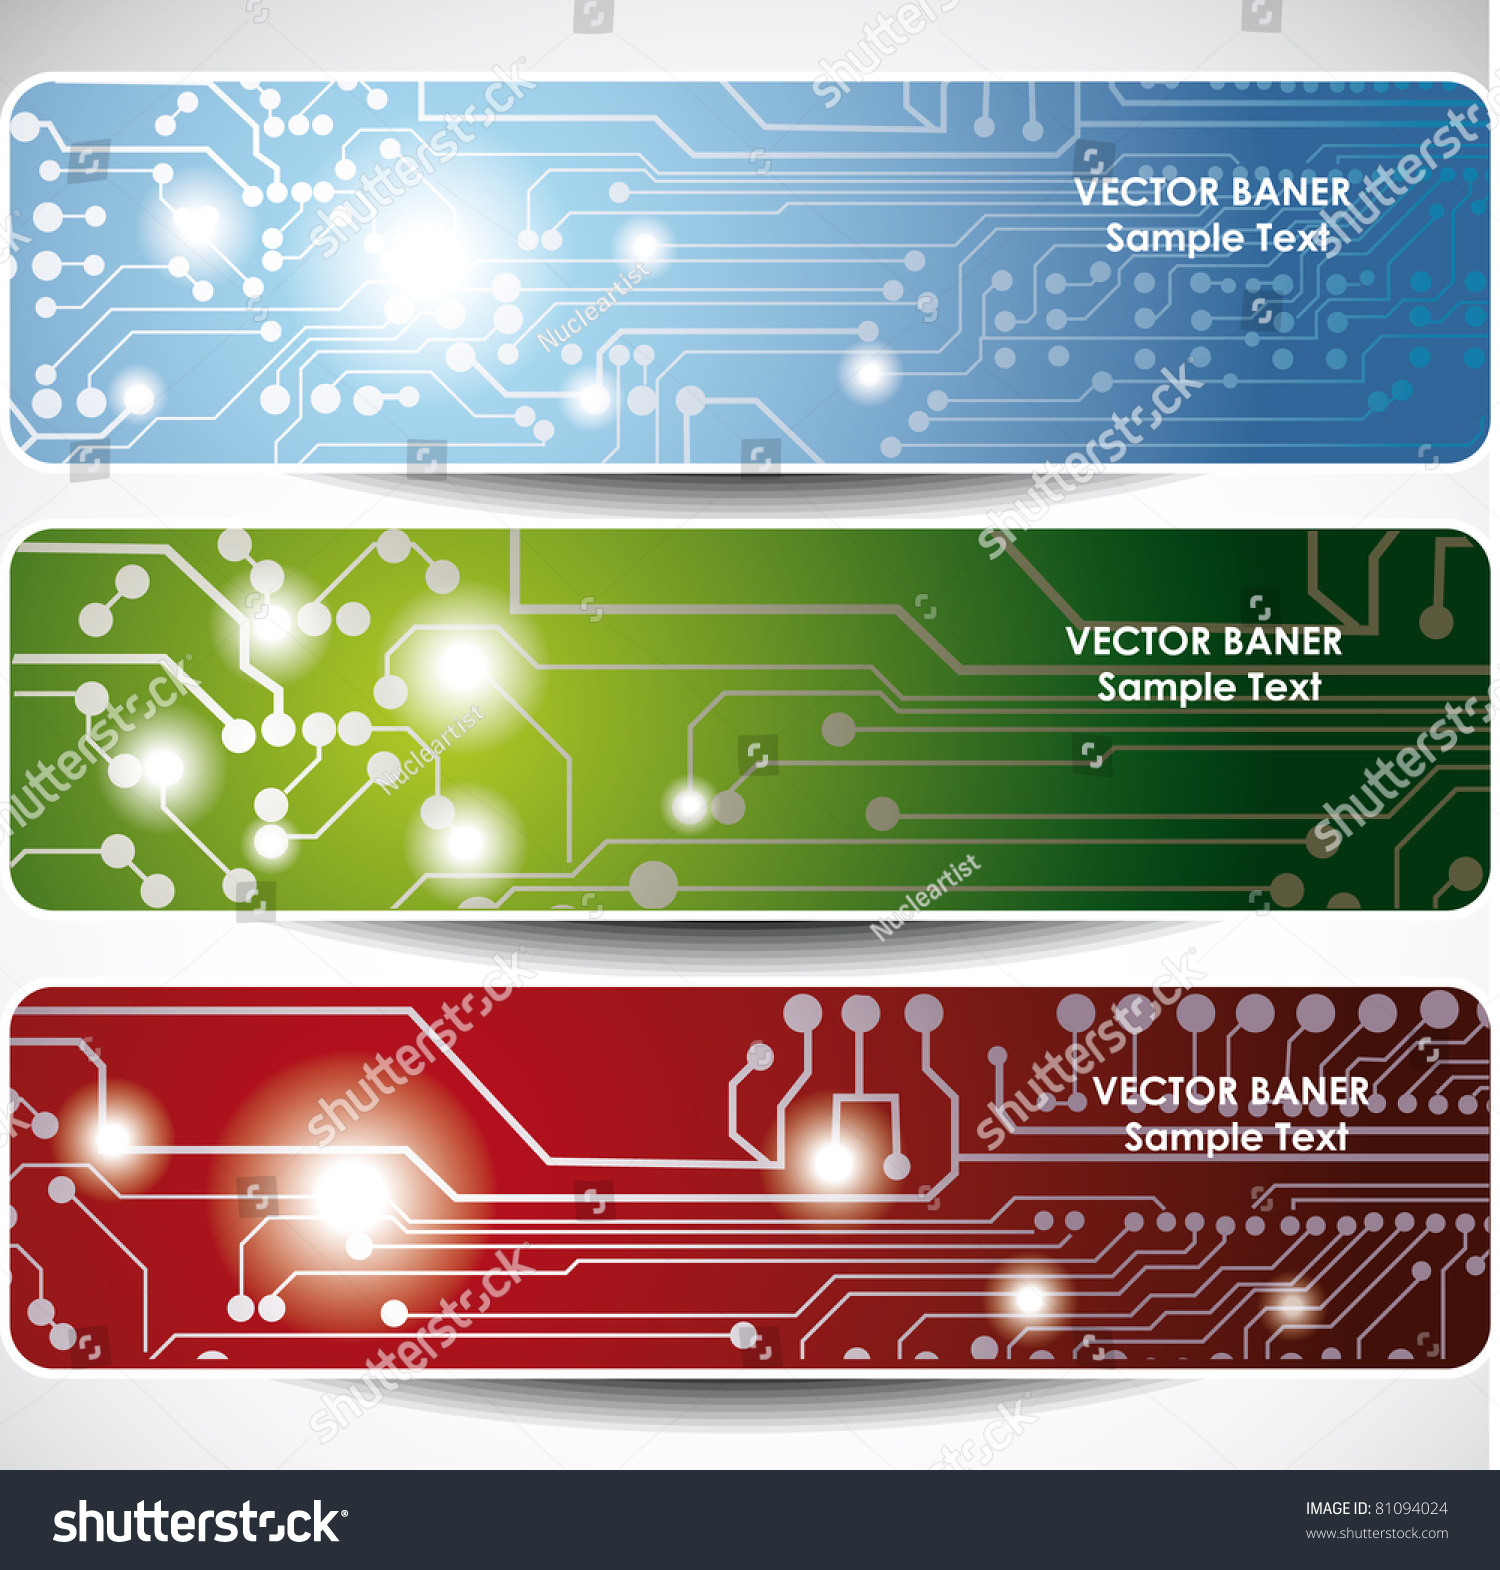 Electronics Web Banners Stock Vector Illustration 81094024 : Shutterstock